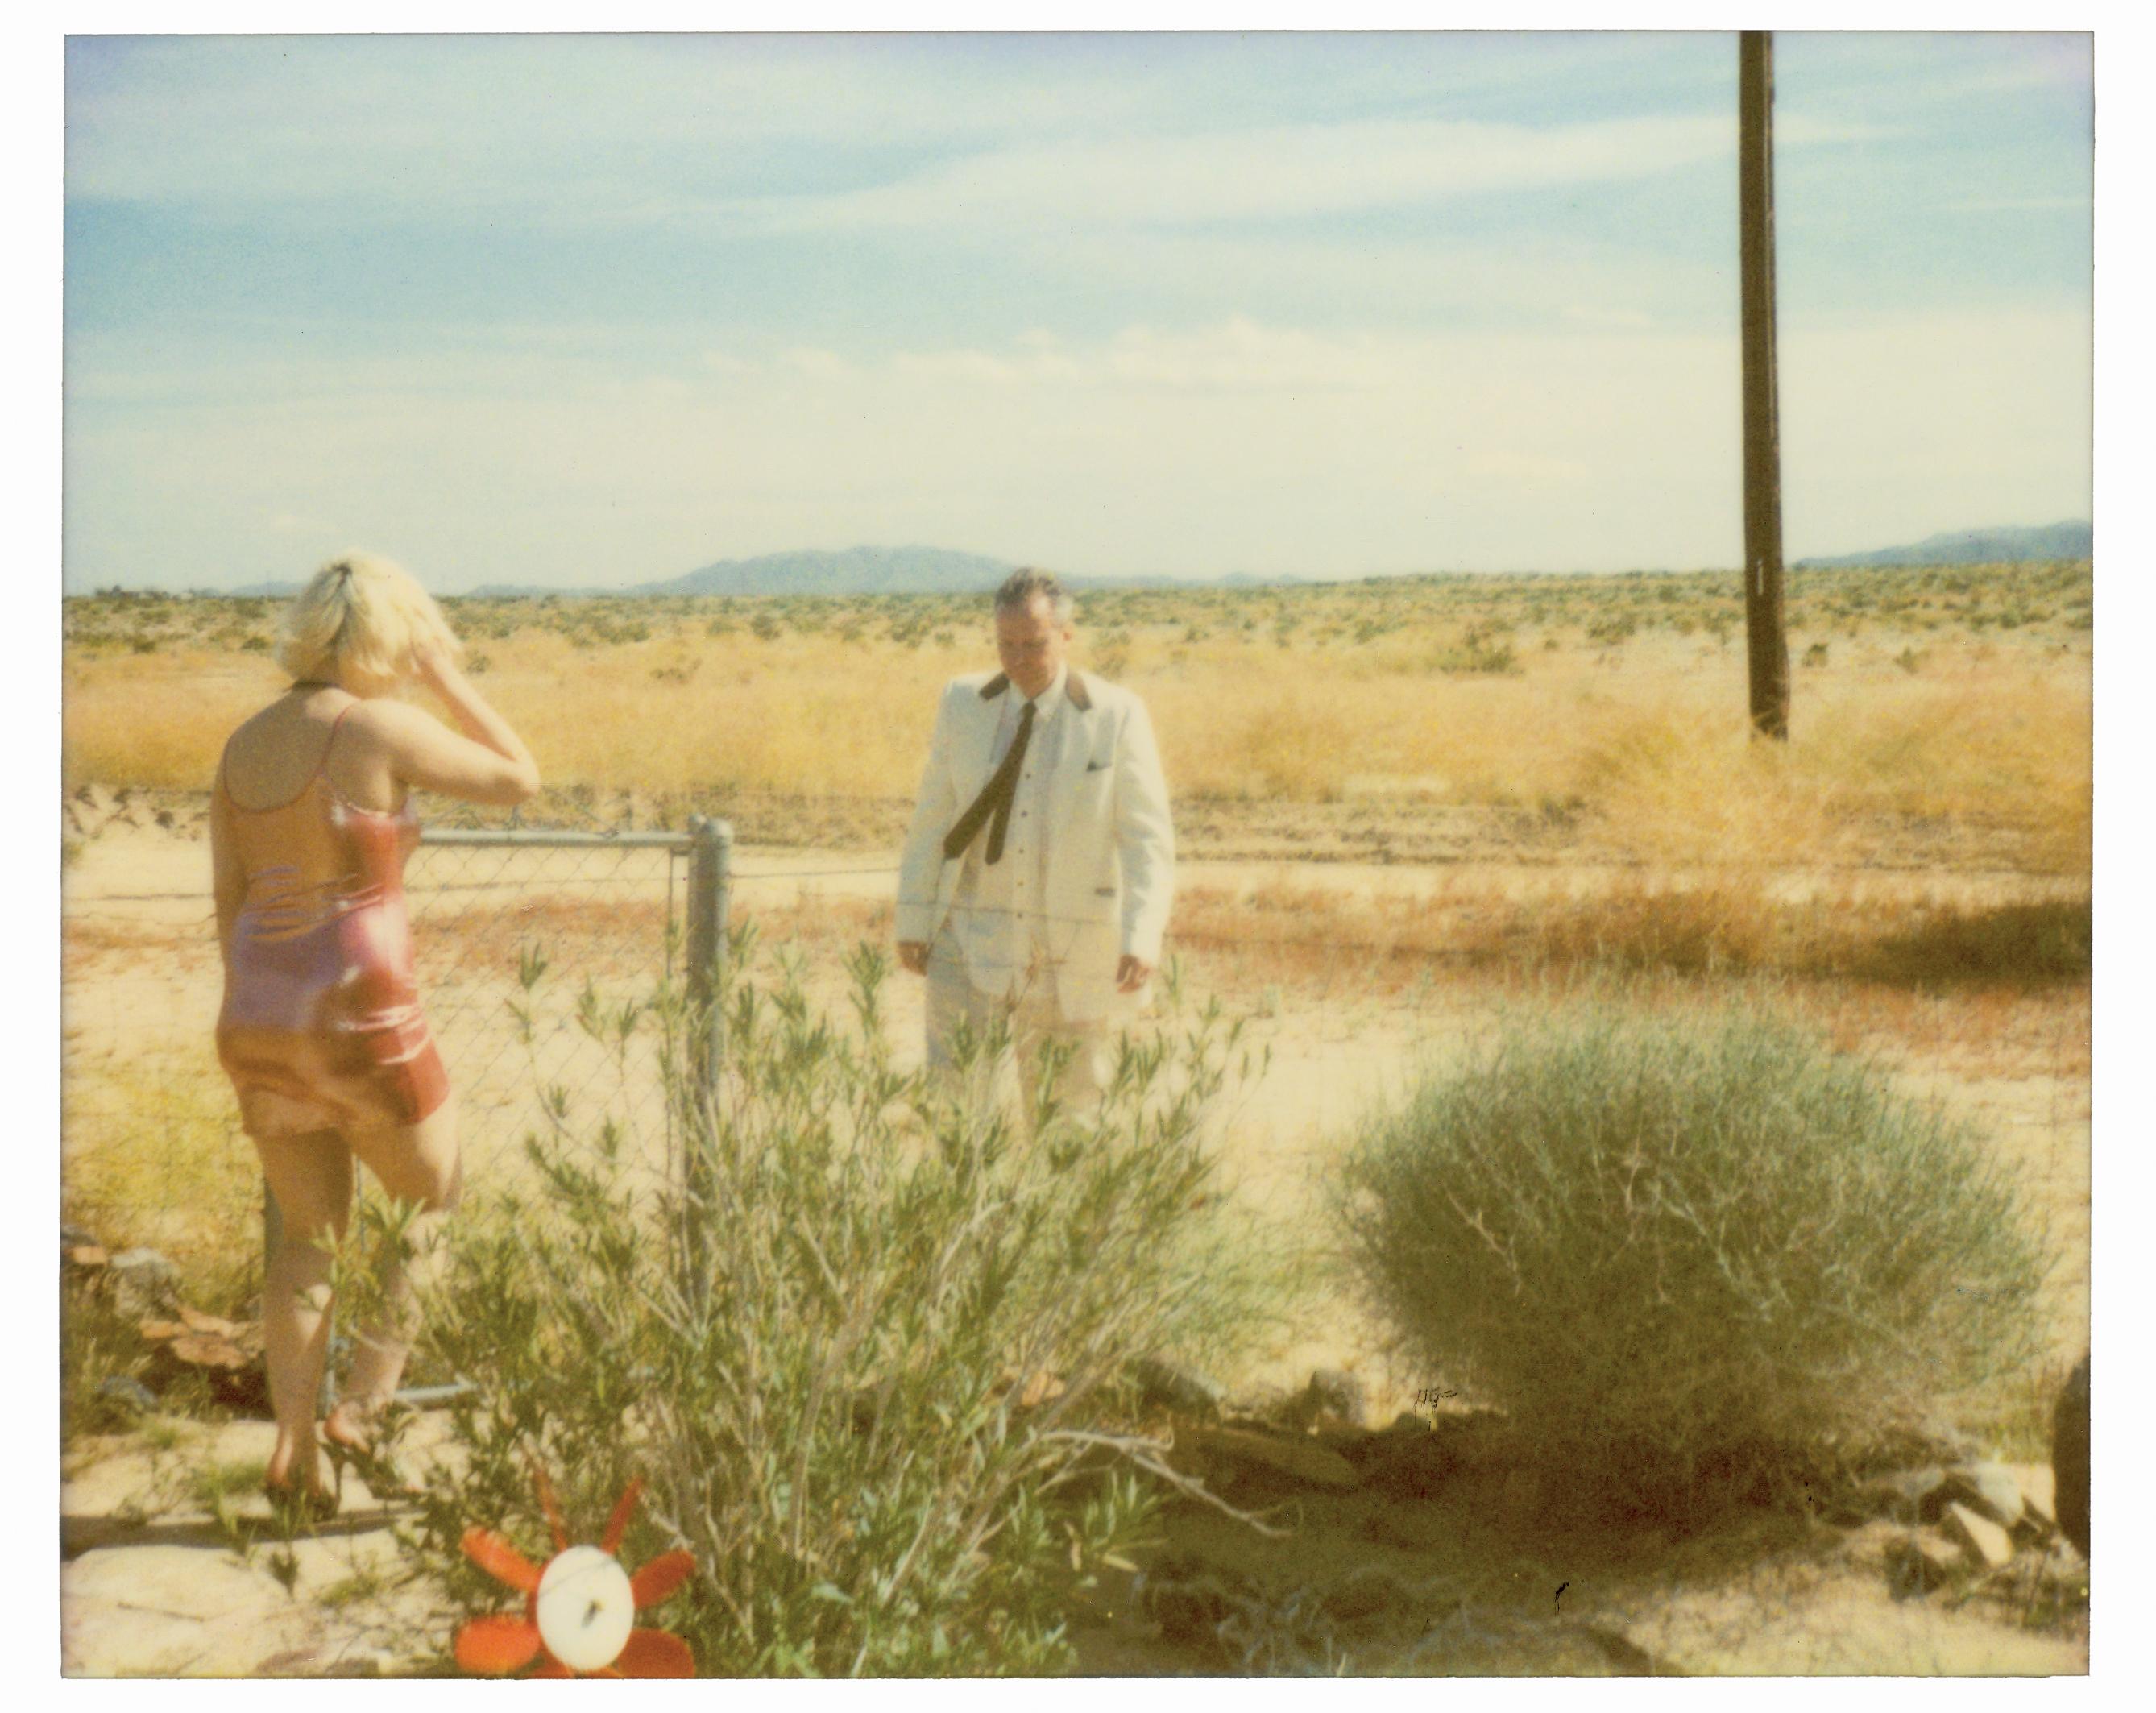 Stefanie Schneider Color Photograph - Wonder Valley (29 Palms, CA) - analog, mounted, hand-print, Polaroid, 21st 